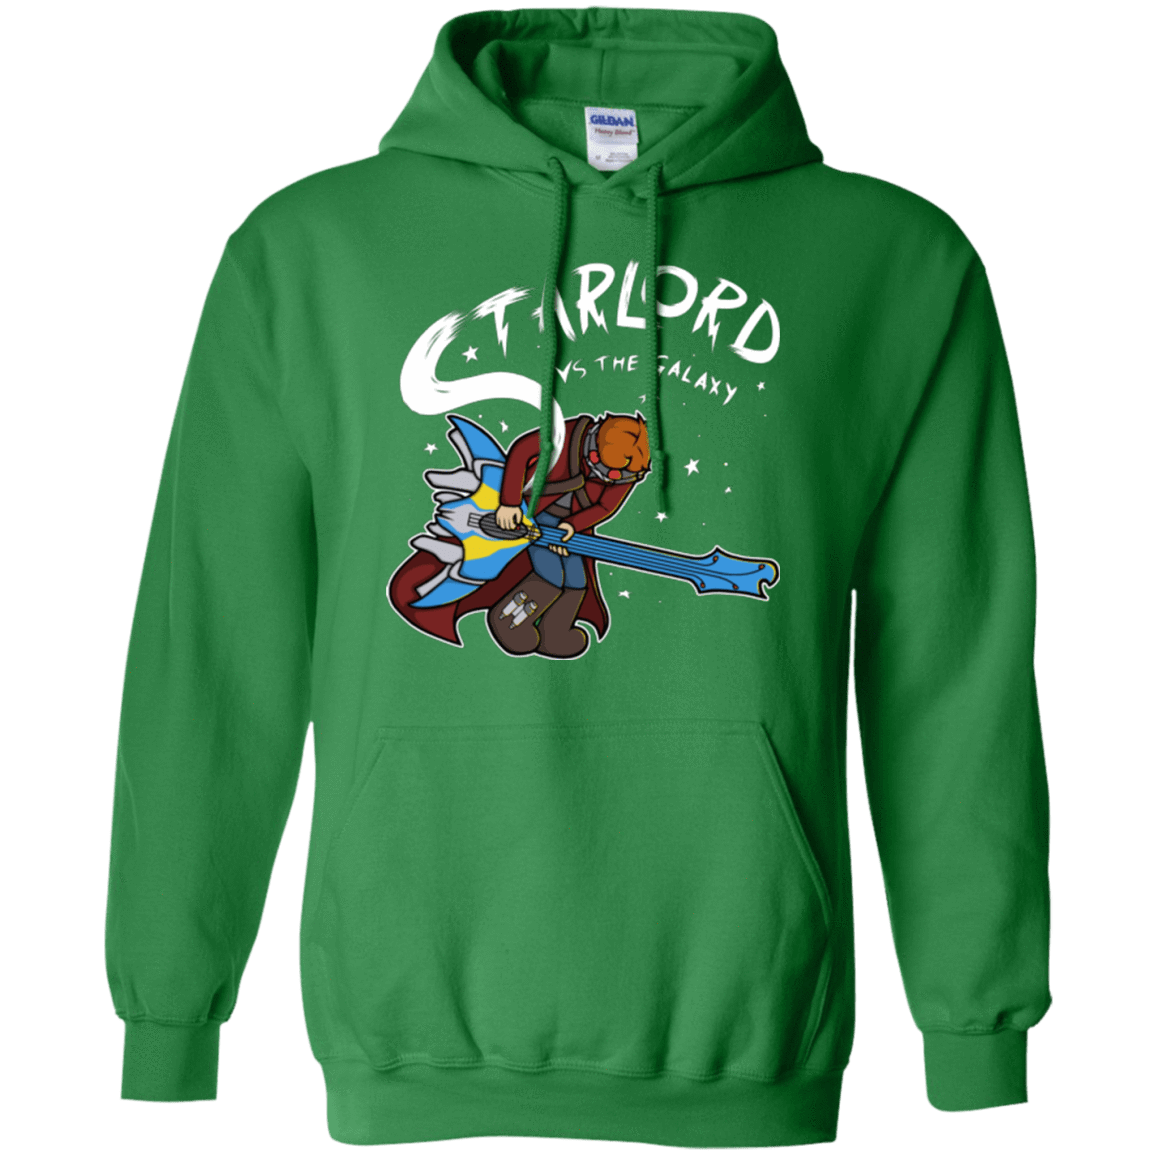 Sweatshirts Irish Green / Small Starlord vs The Galaxy Pullover Hoodie